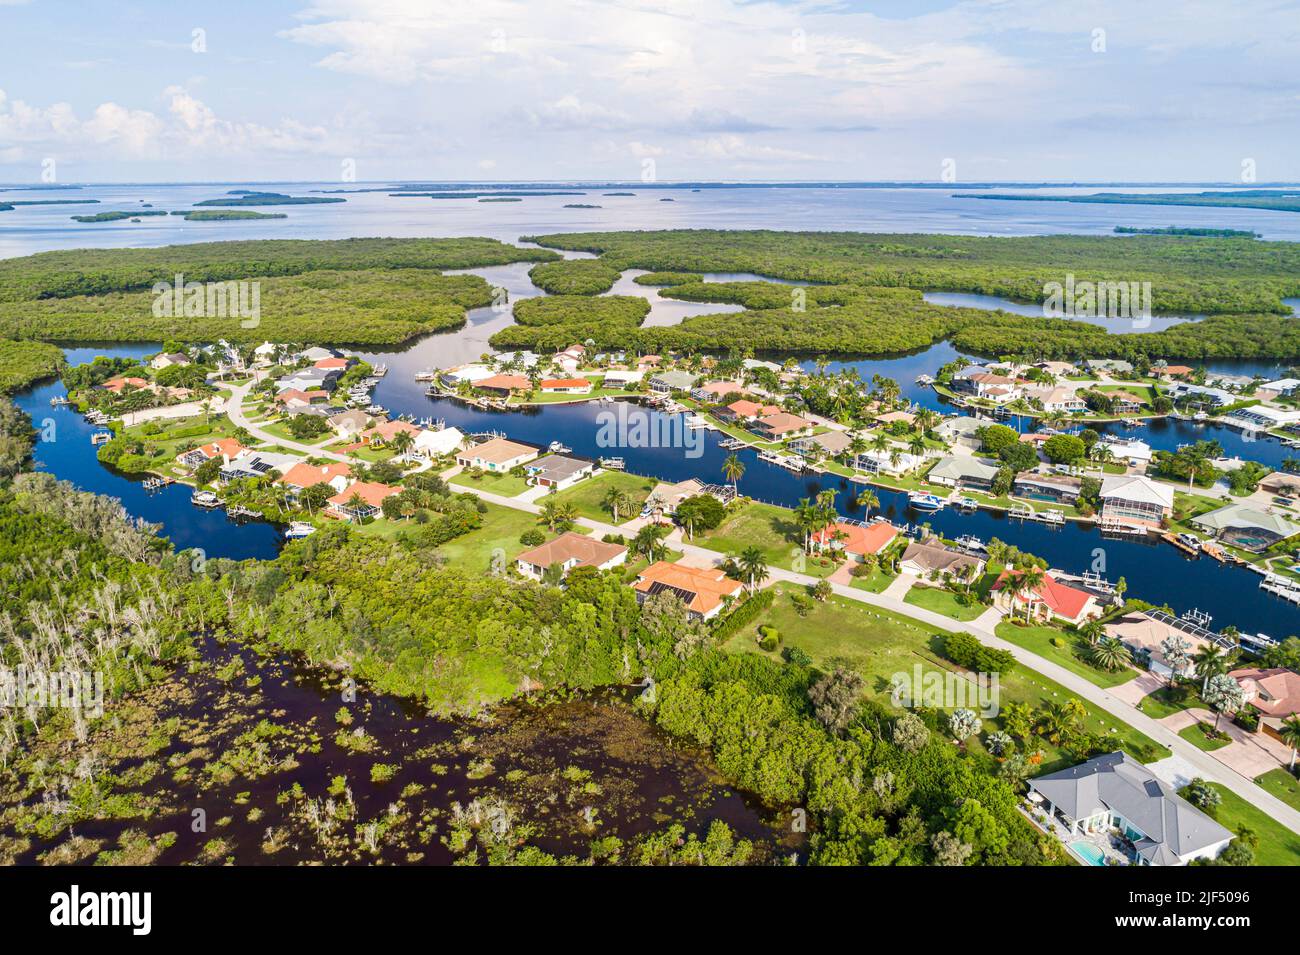 Fort Ft. Myers Florida,Palm Acres development houses homes neighborhood encroachment,Caloosahatchee River wetlands Gulf of Mexico Big Shell Island Kin Stock Photo